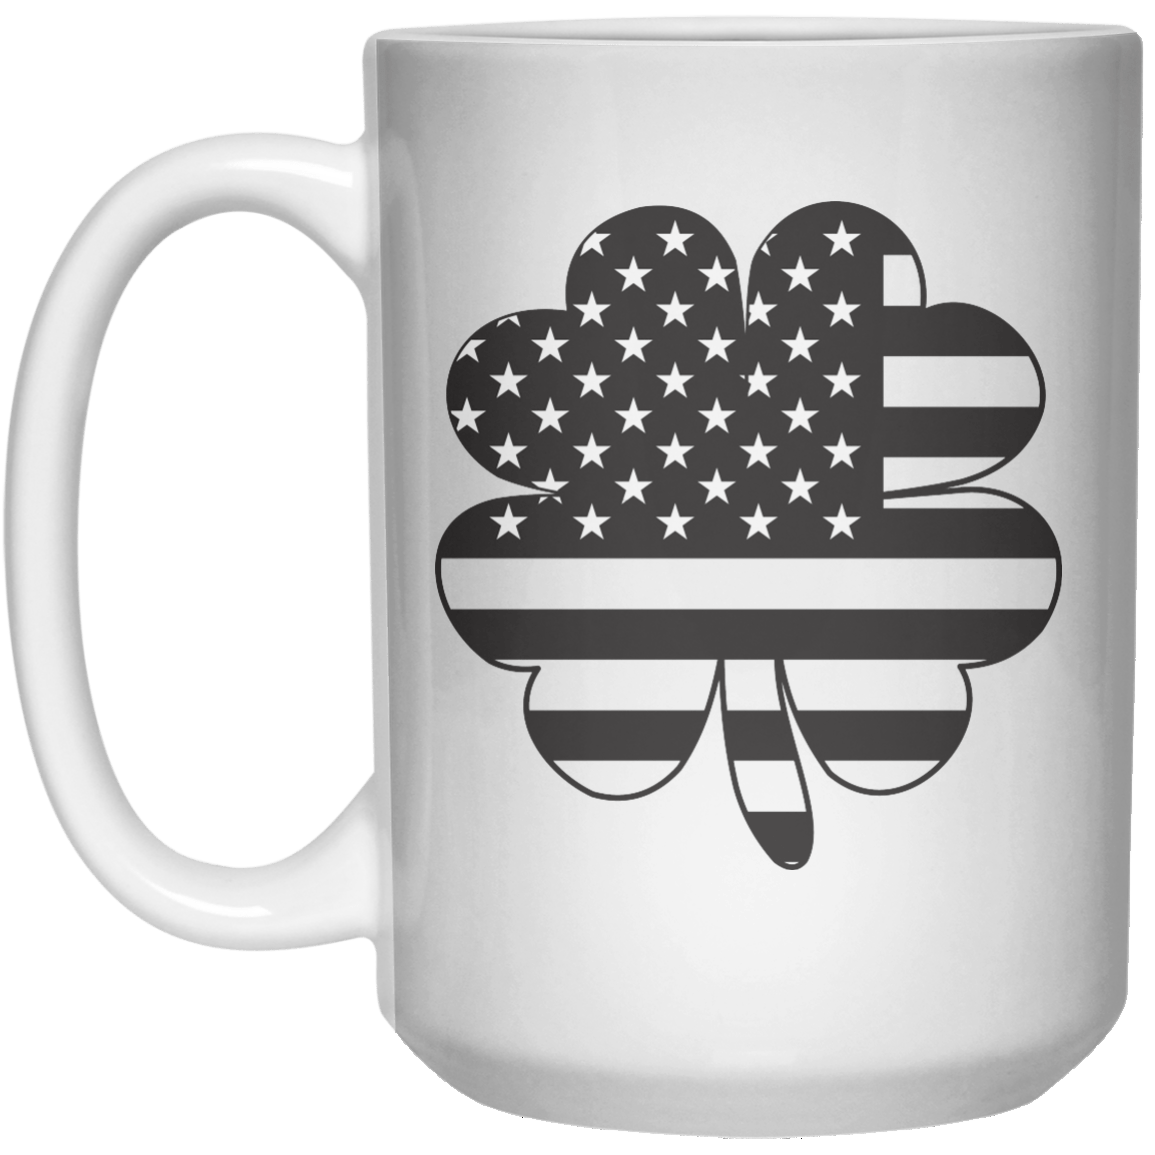 American Clover MUG  Mug - 15oz - Shirtoopia